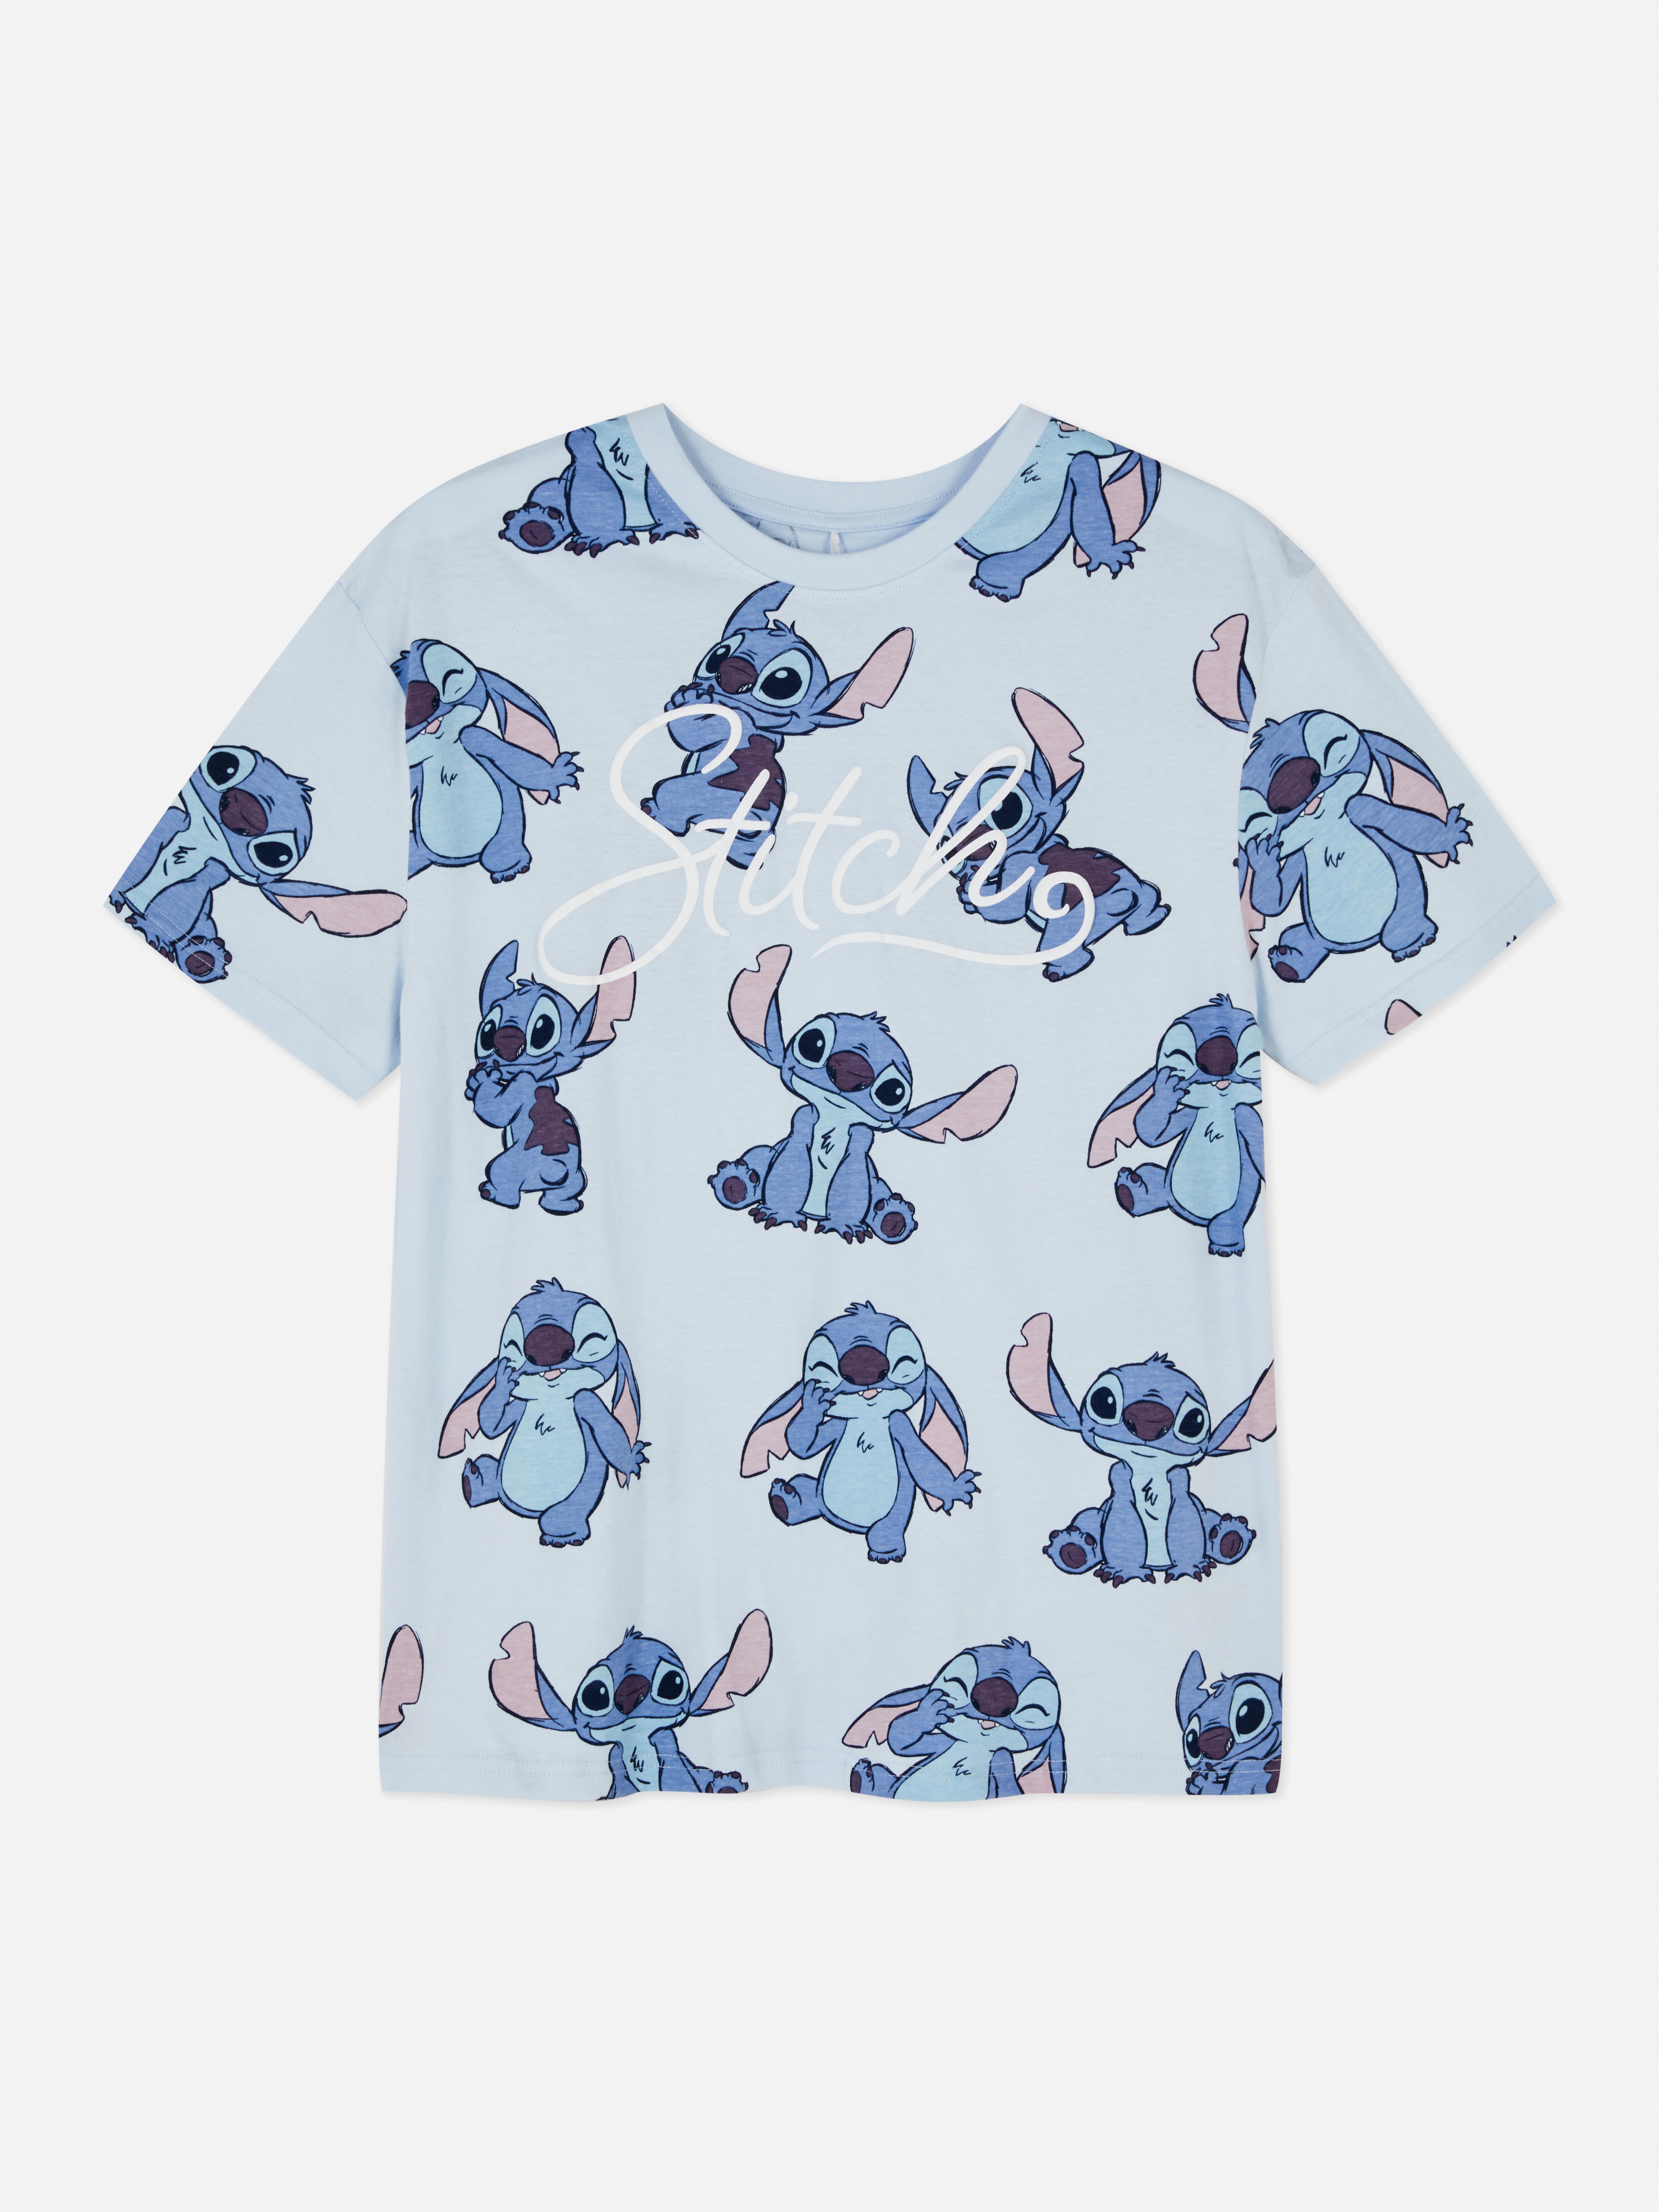 Disney's Characters Originals Pyjama T-shirt